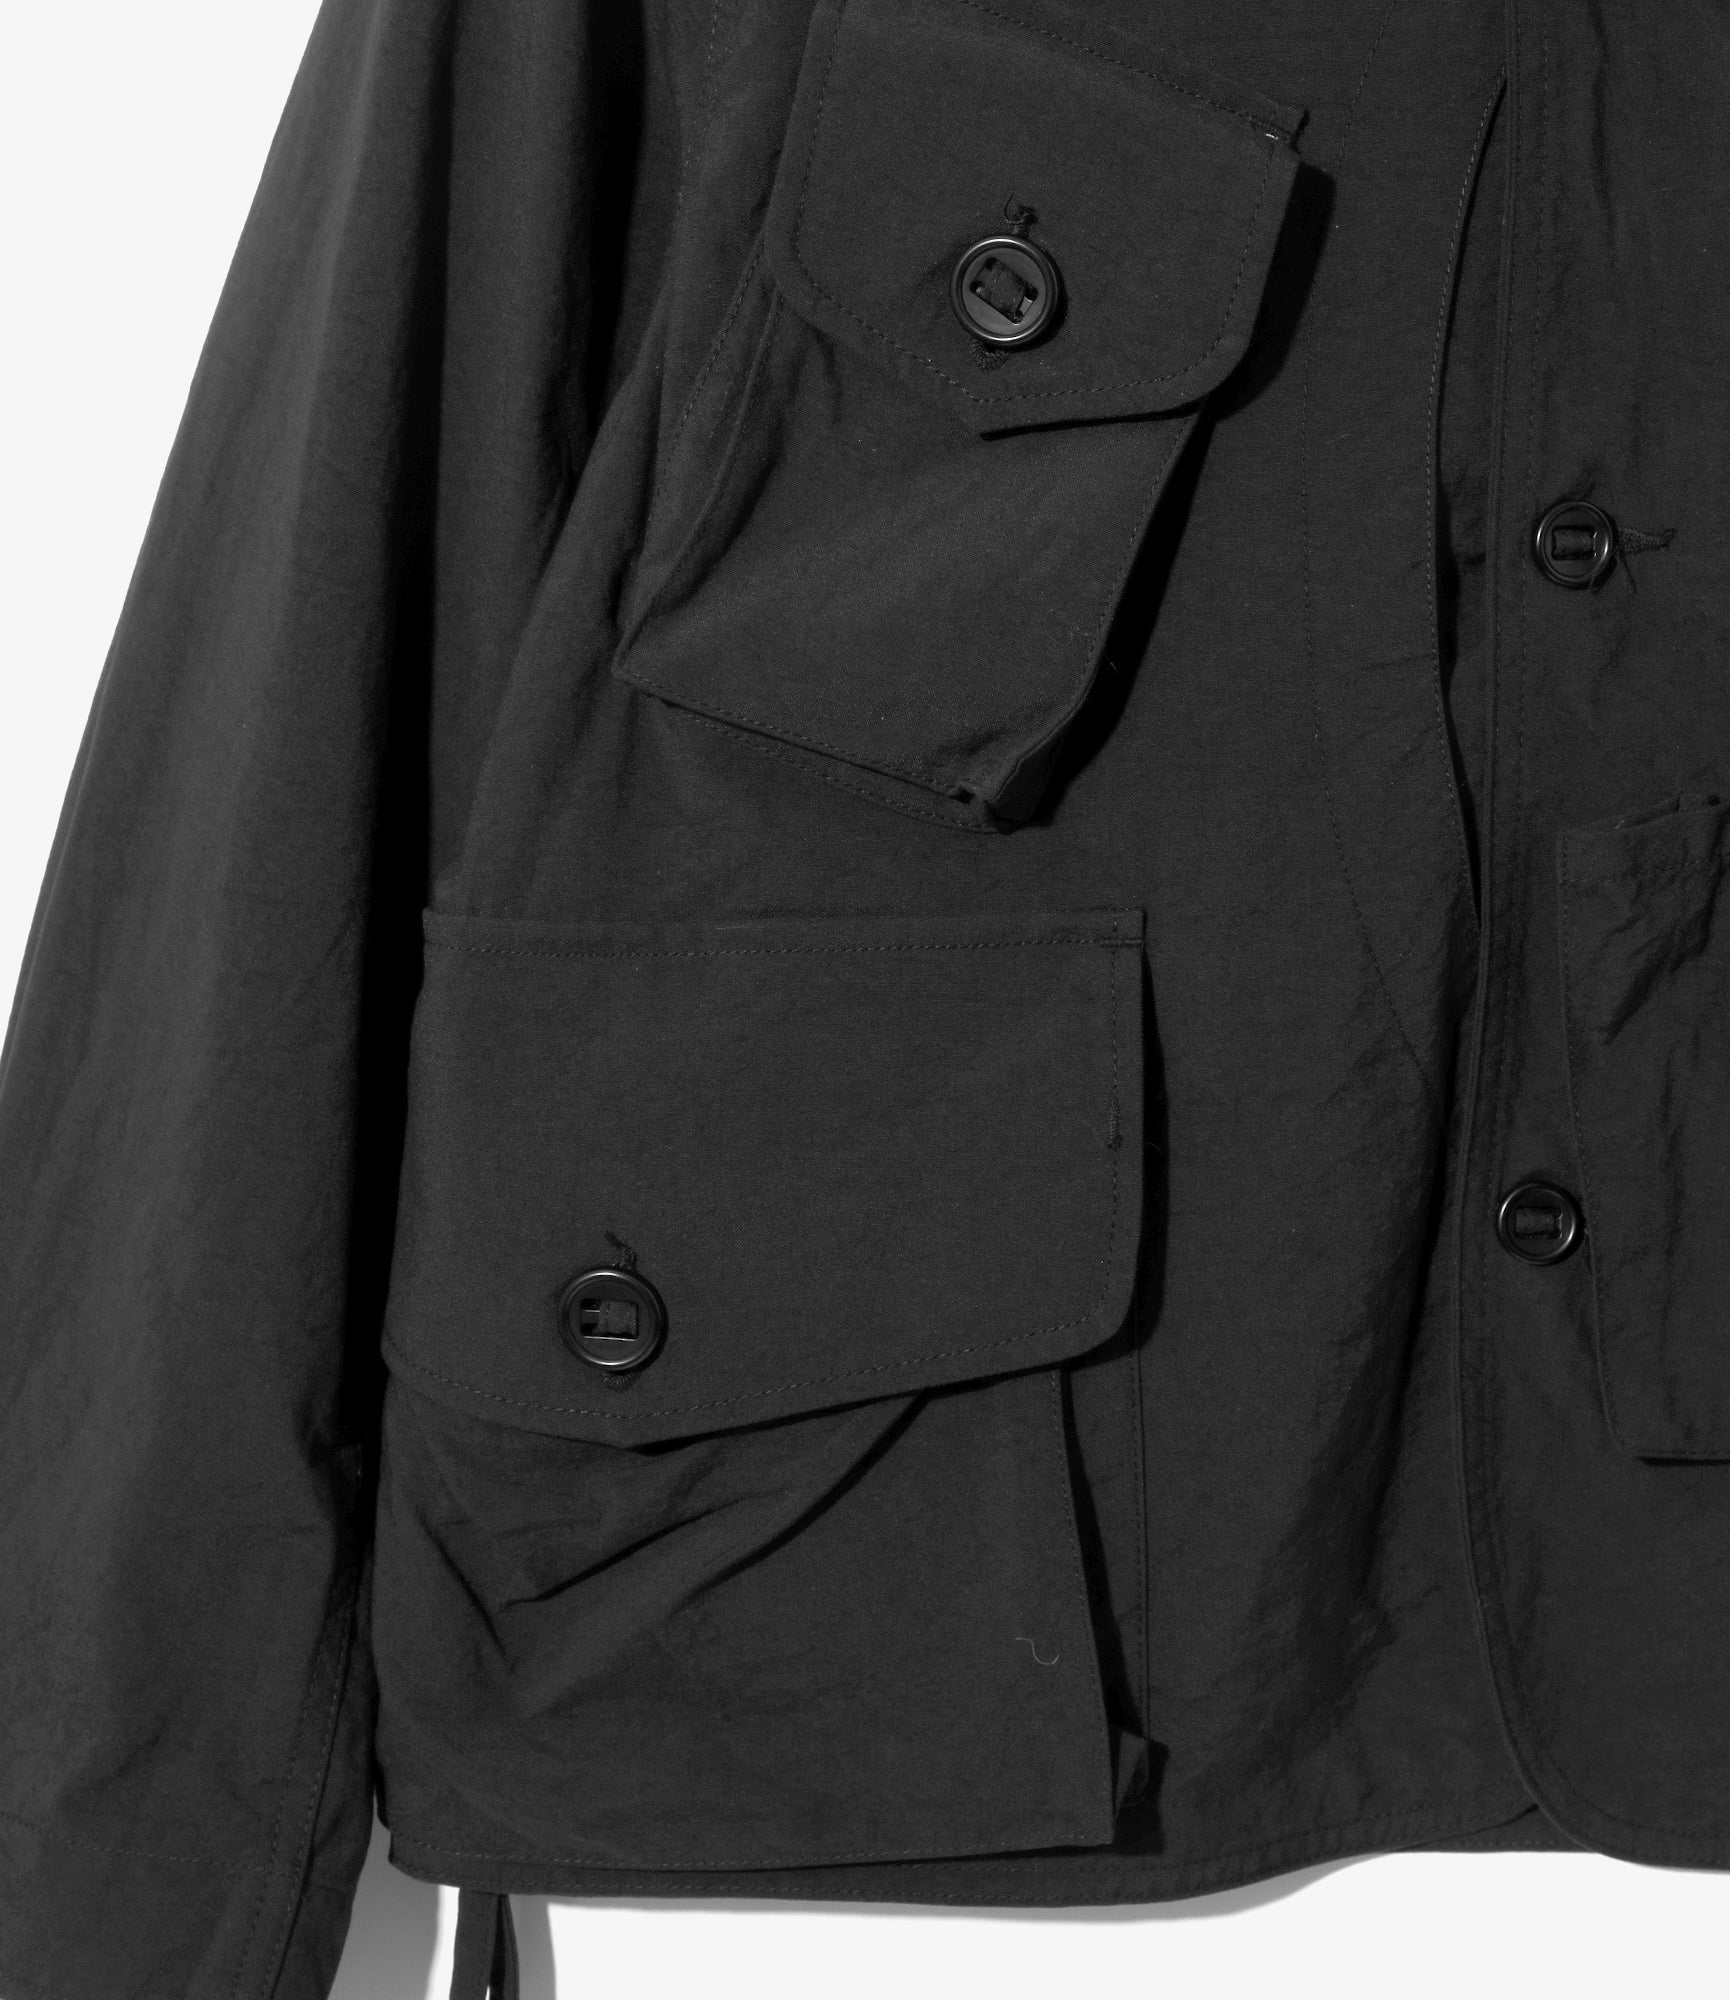 Tenkara Jacket - Black - Nylon Oxford